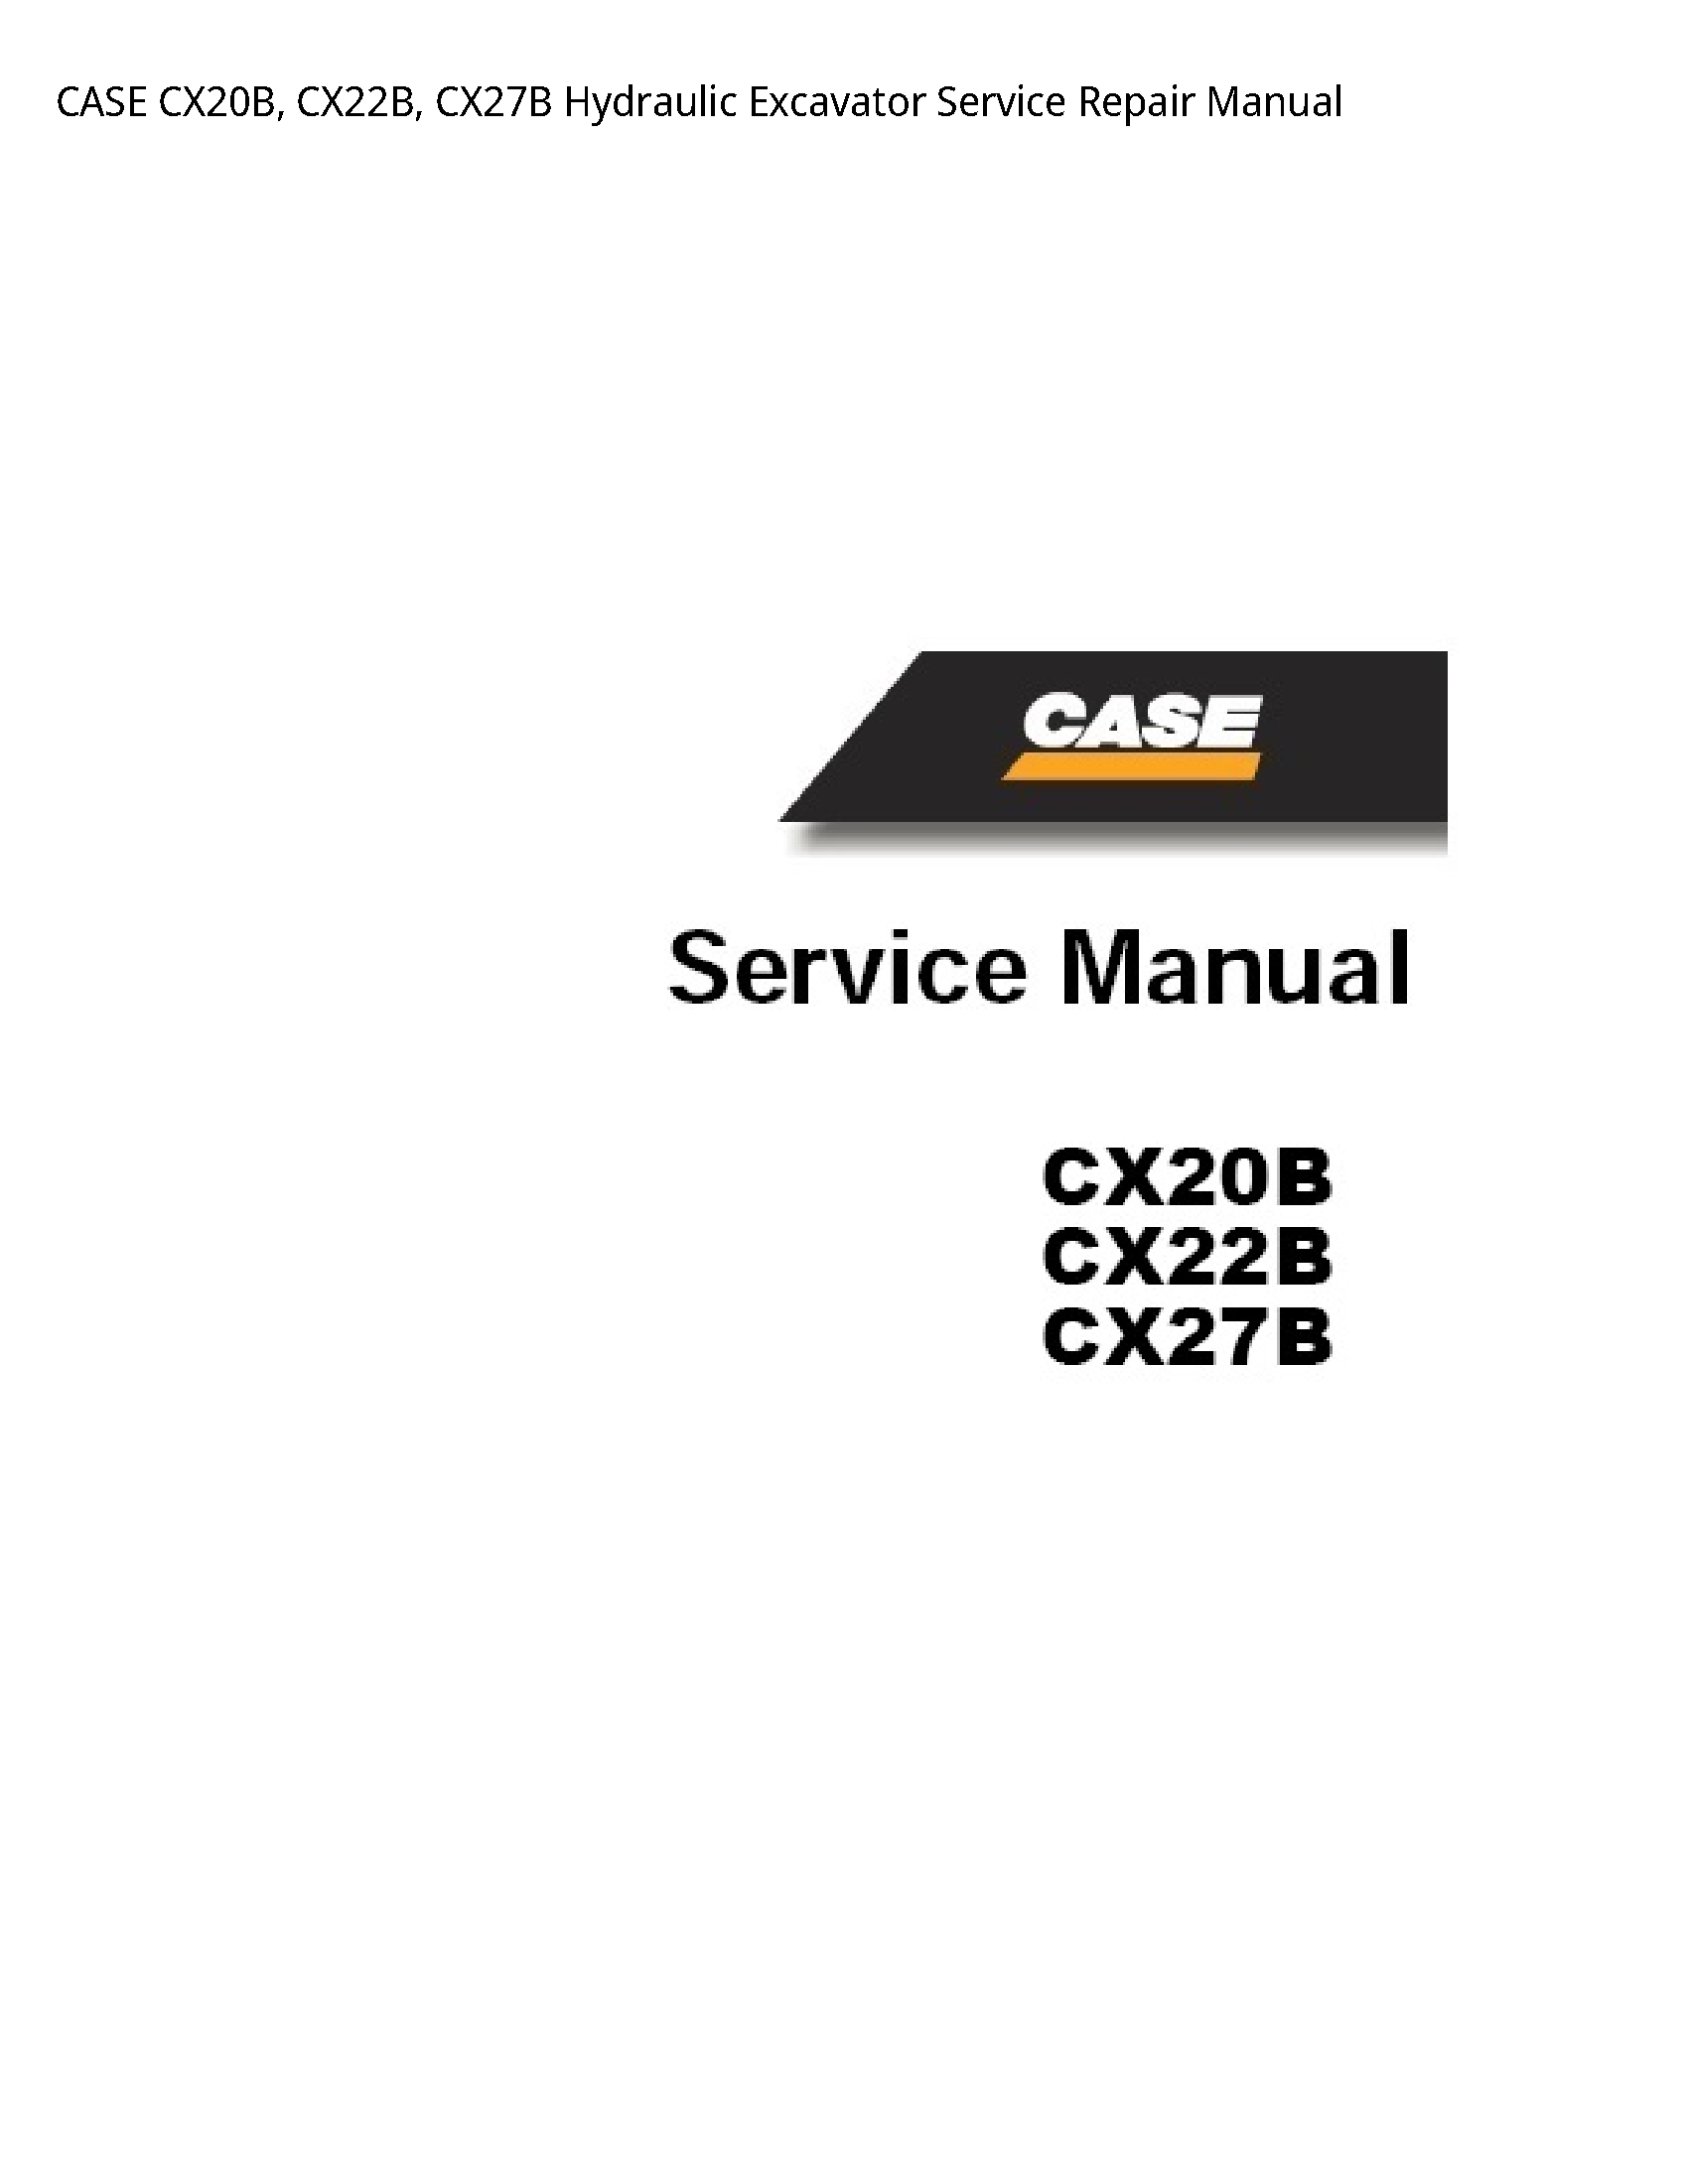 Case/Case IH CX20B Hydraulic Excavator manual